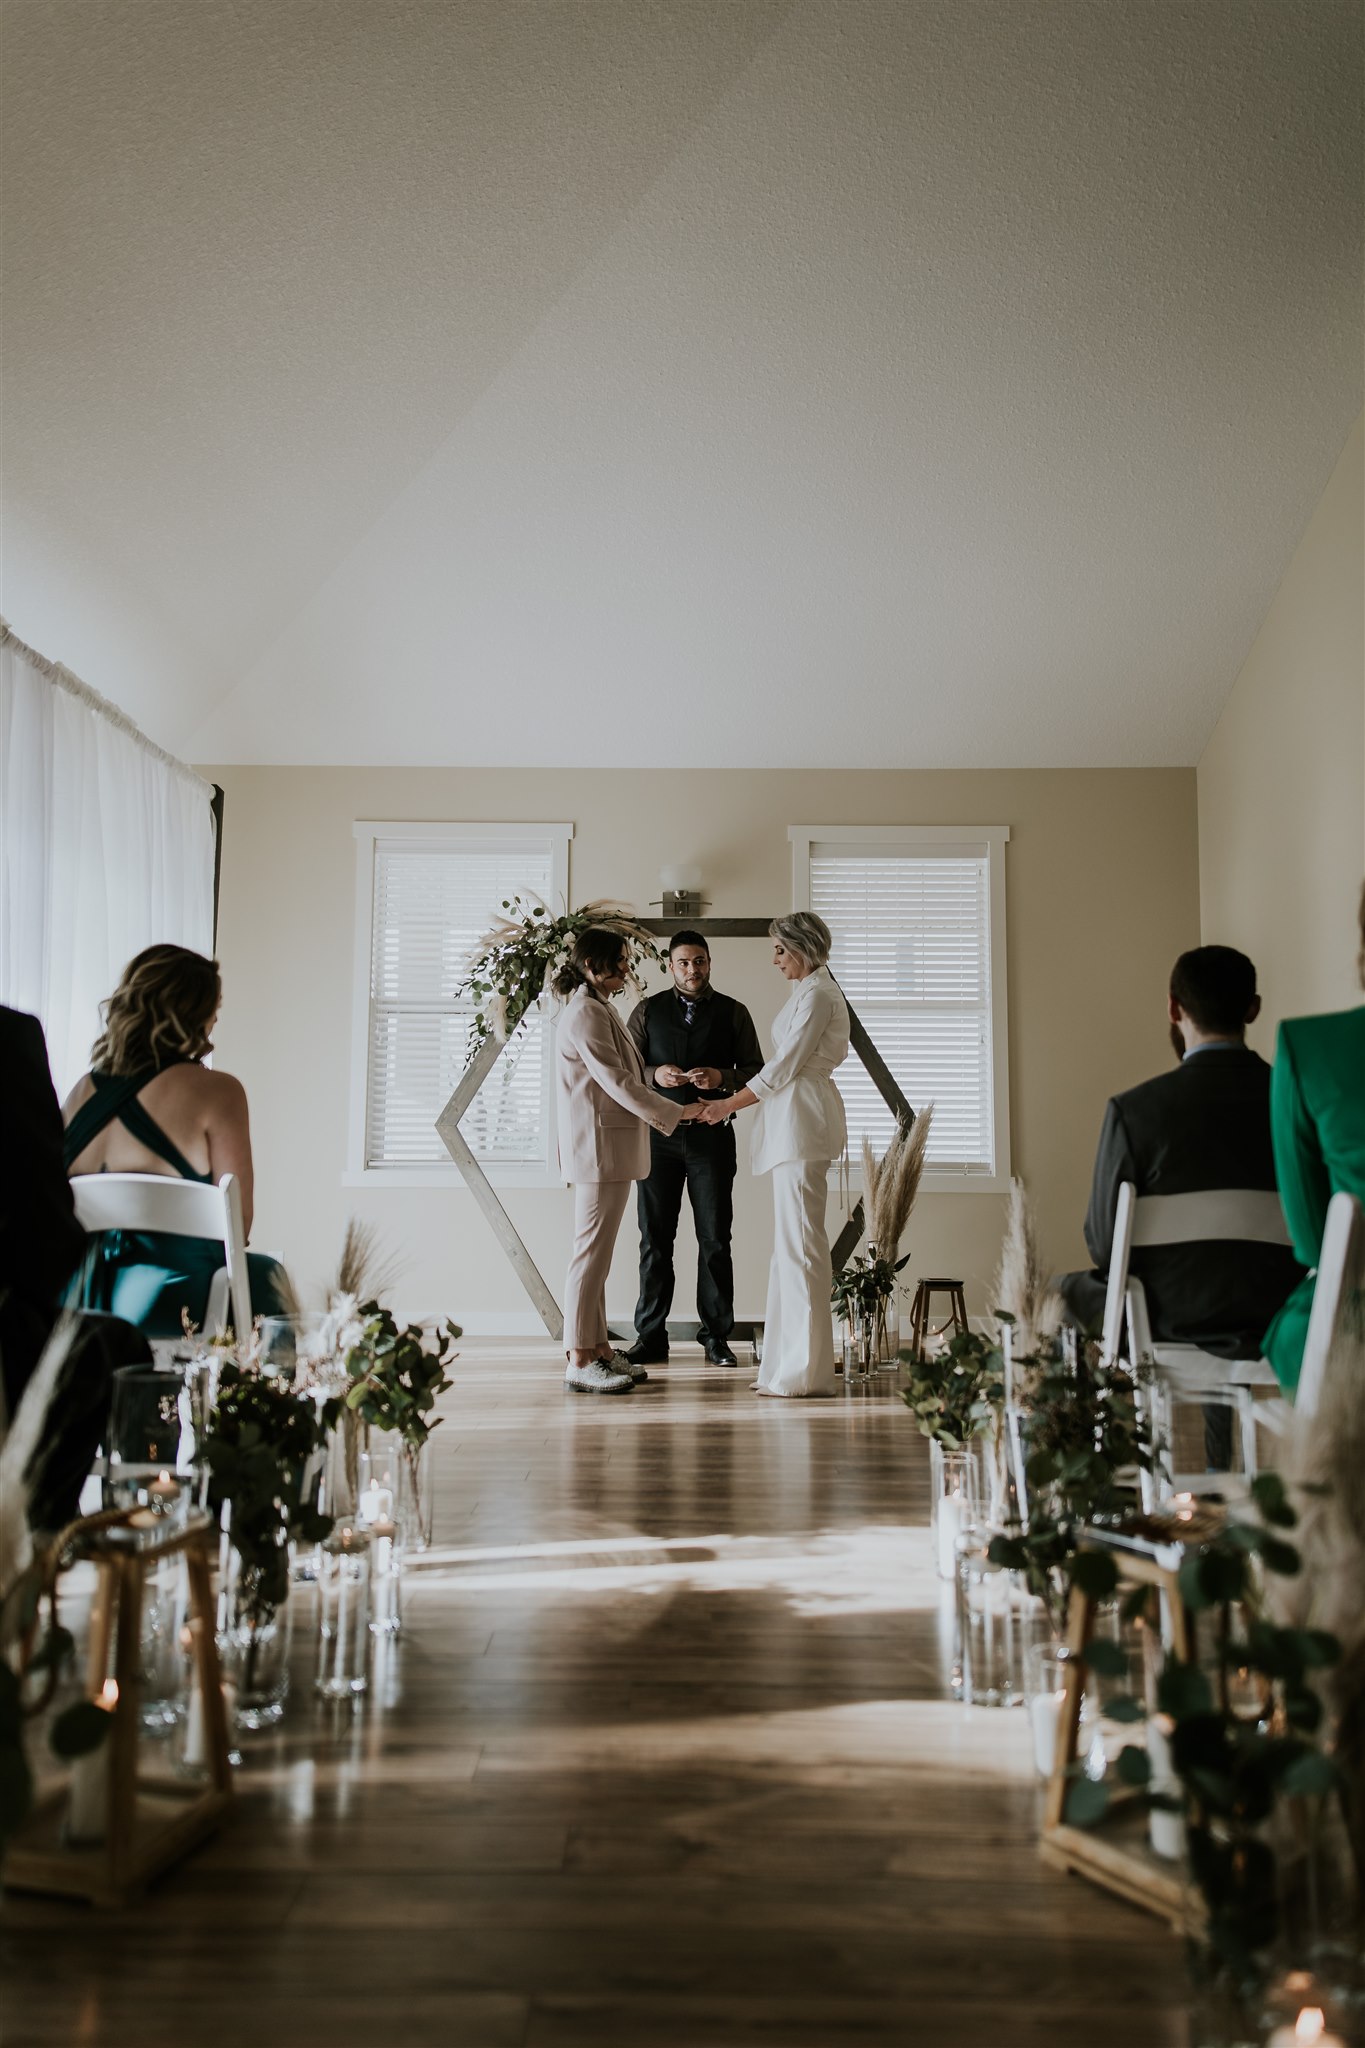 Ray & Klaudia – Intimate Airdrie Wedding